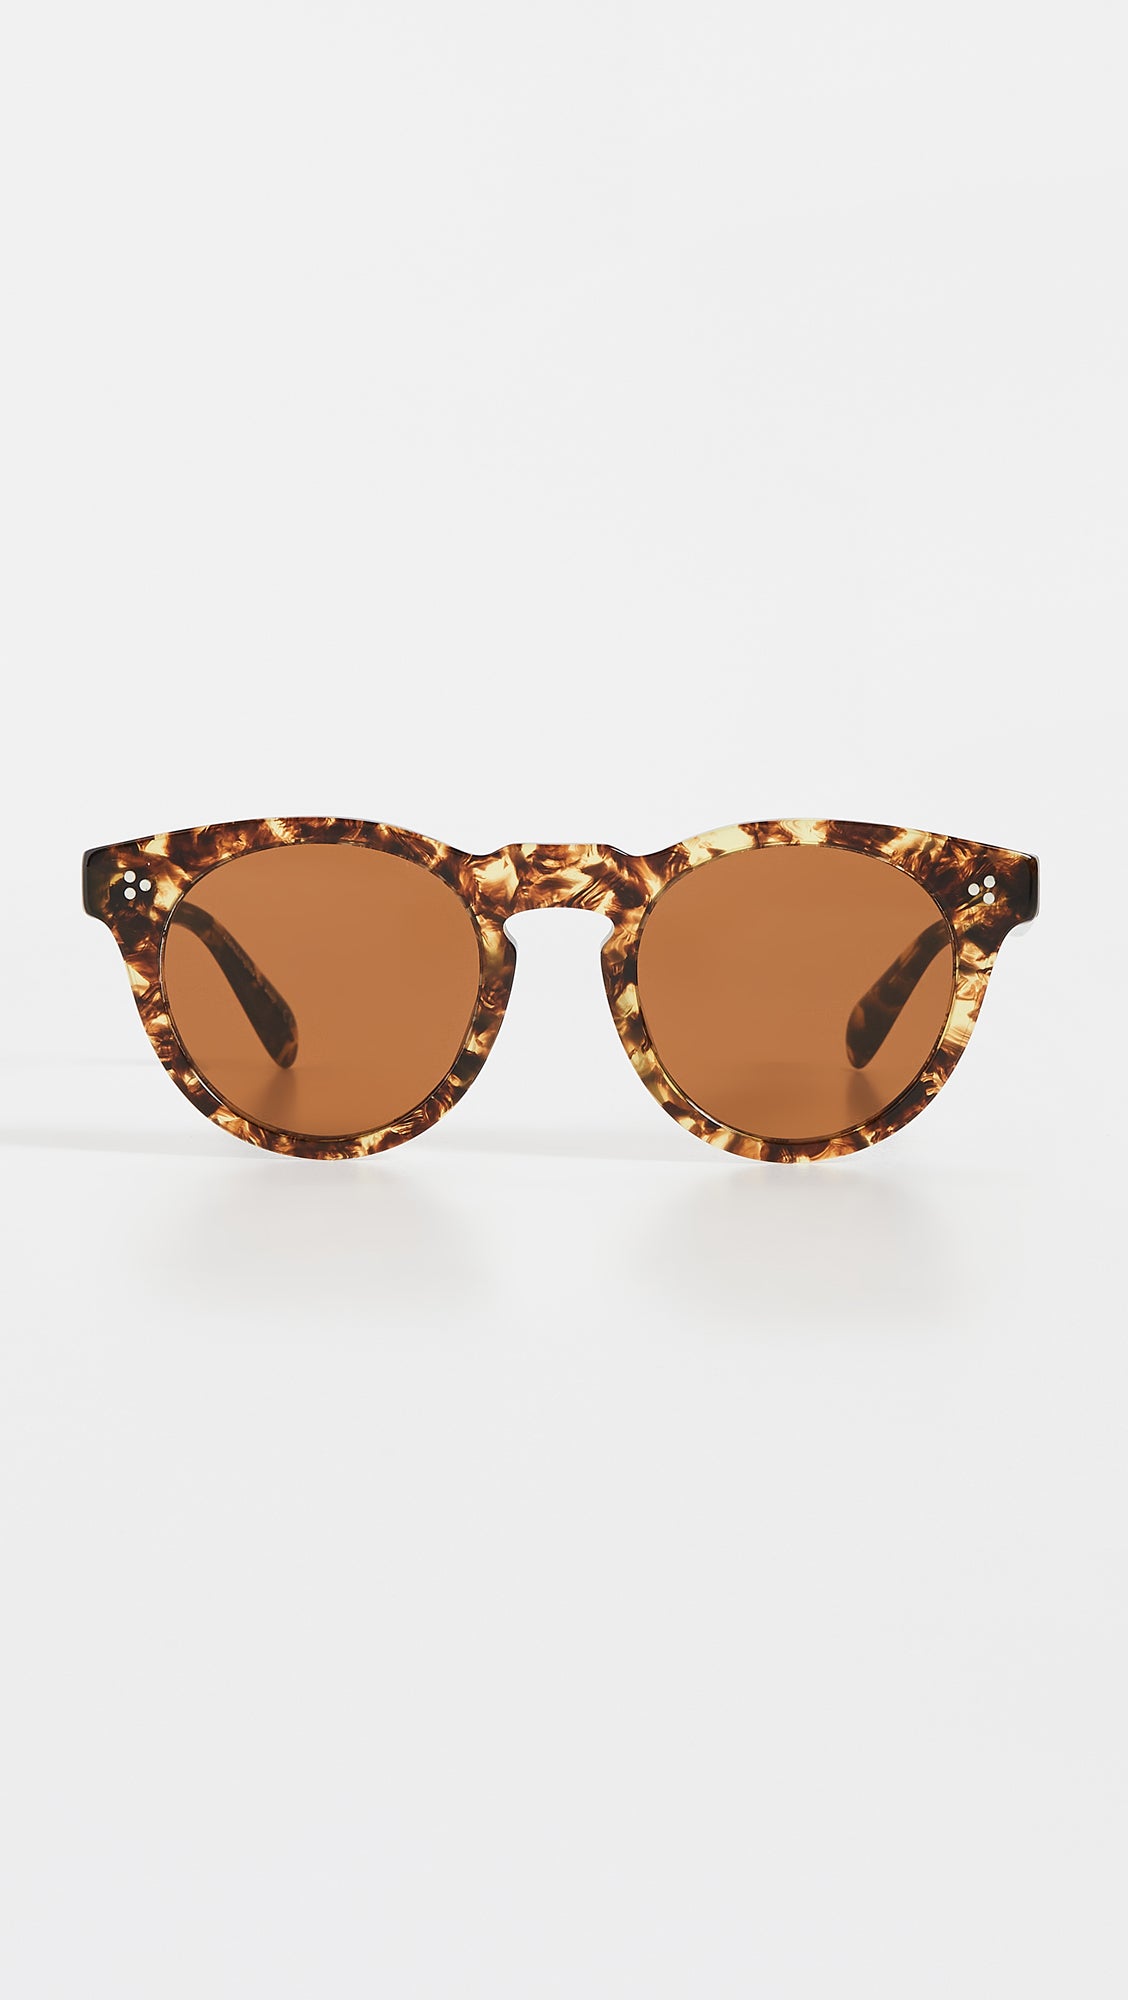 Oliver Peoples Lewen Round Sunglasses in Tortoise Brown